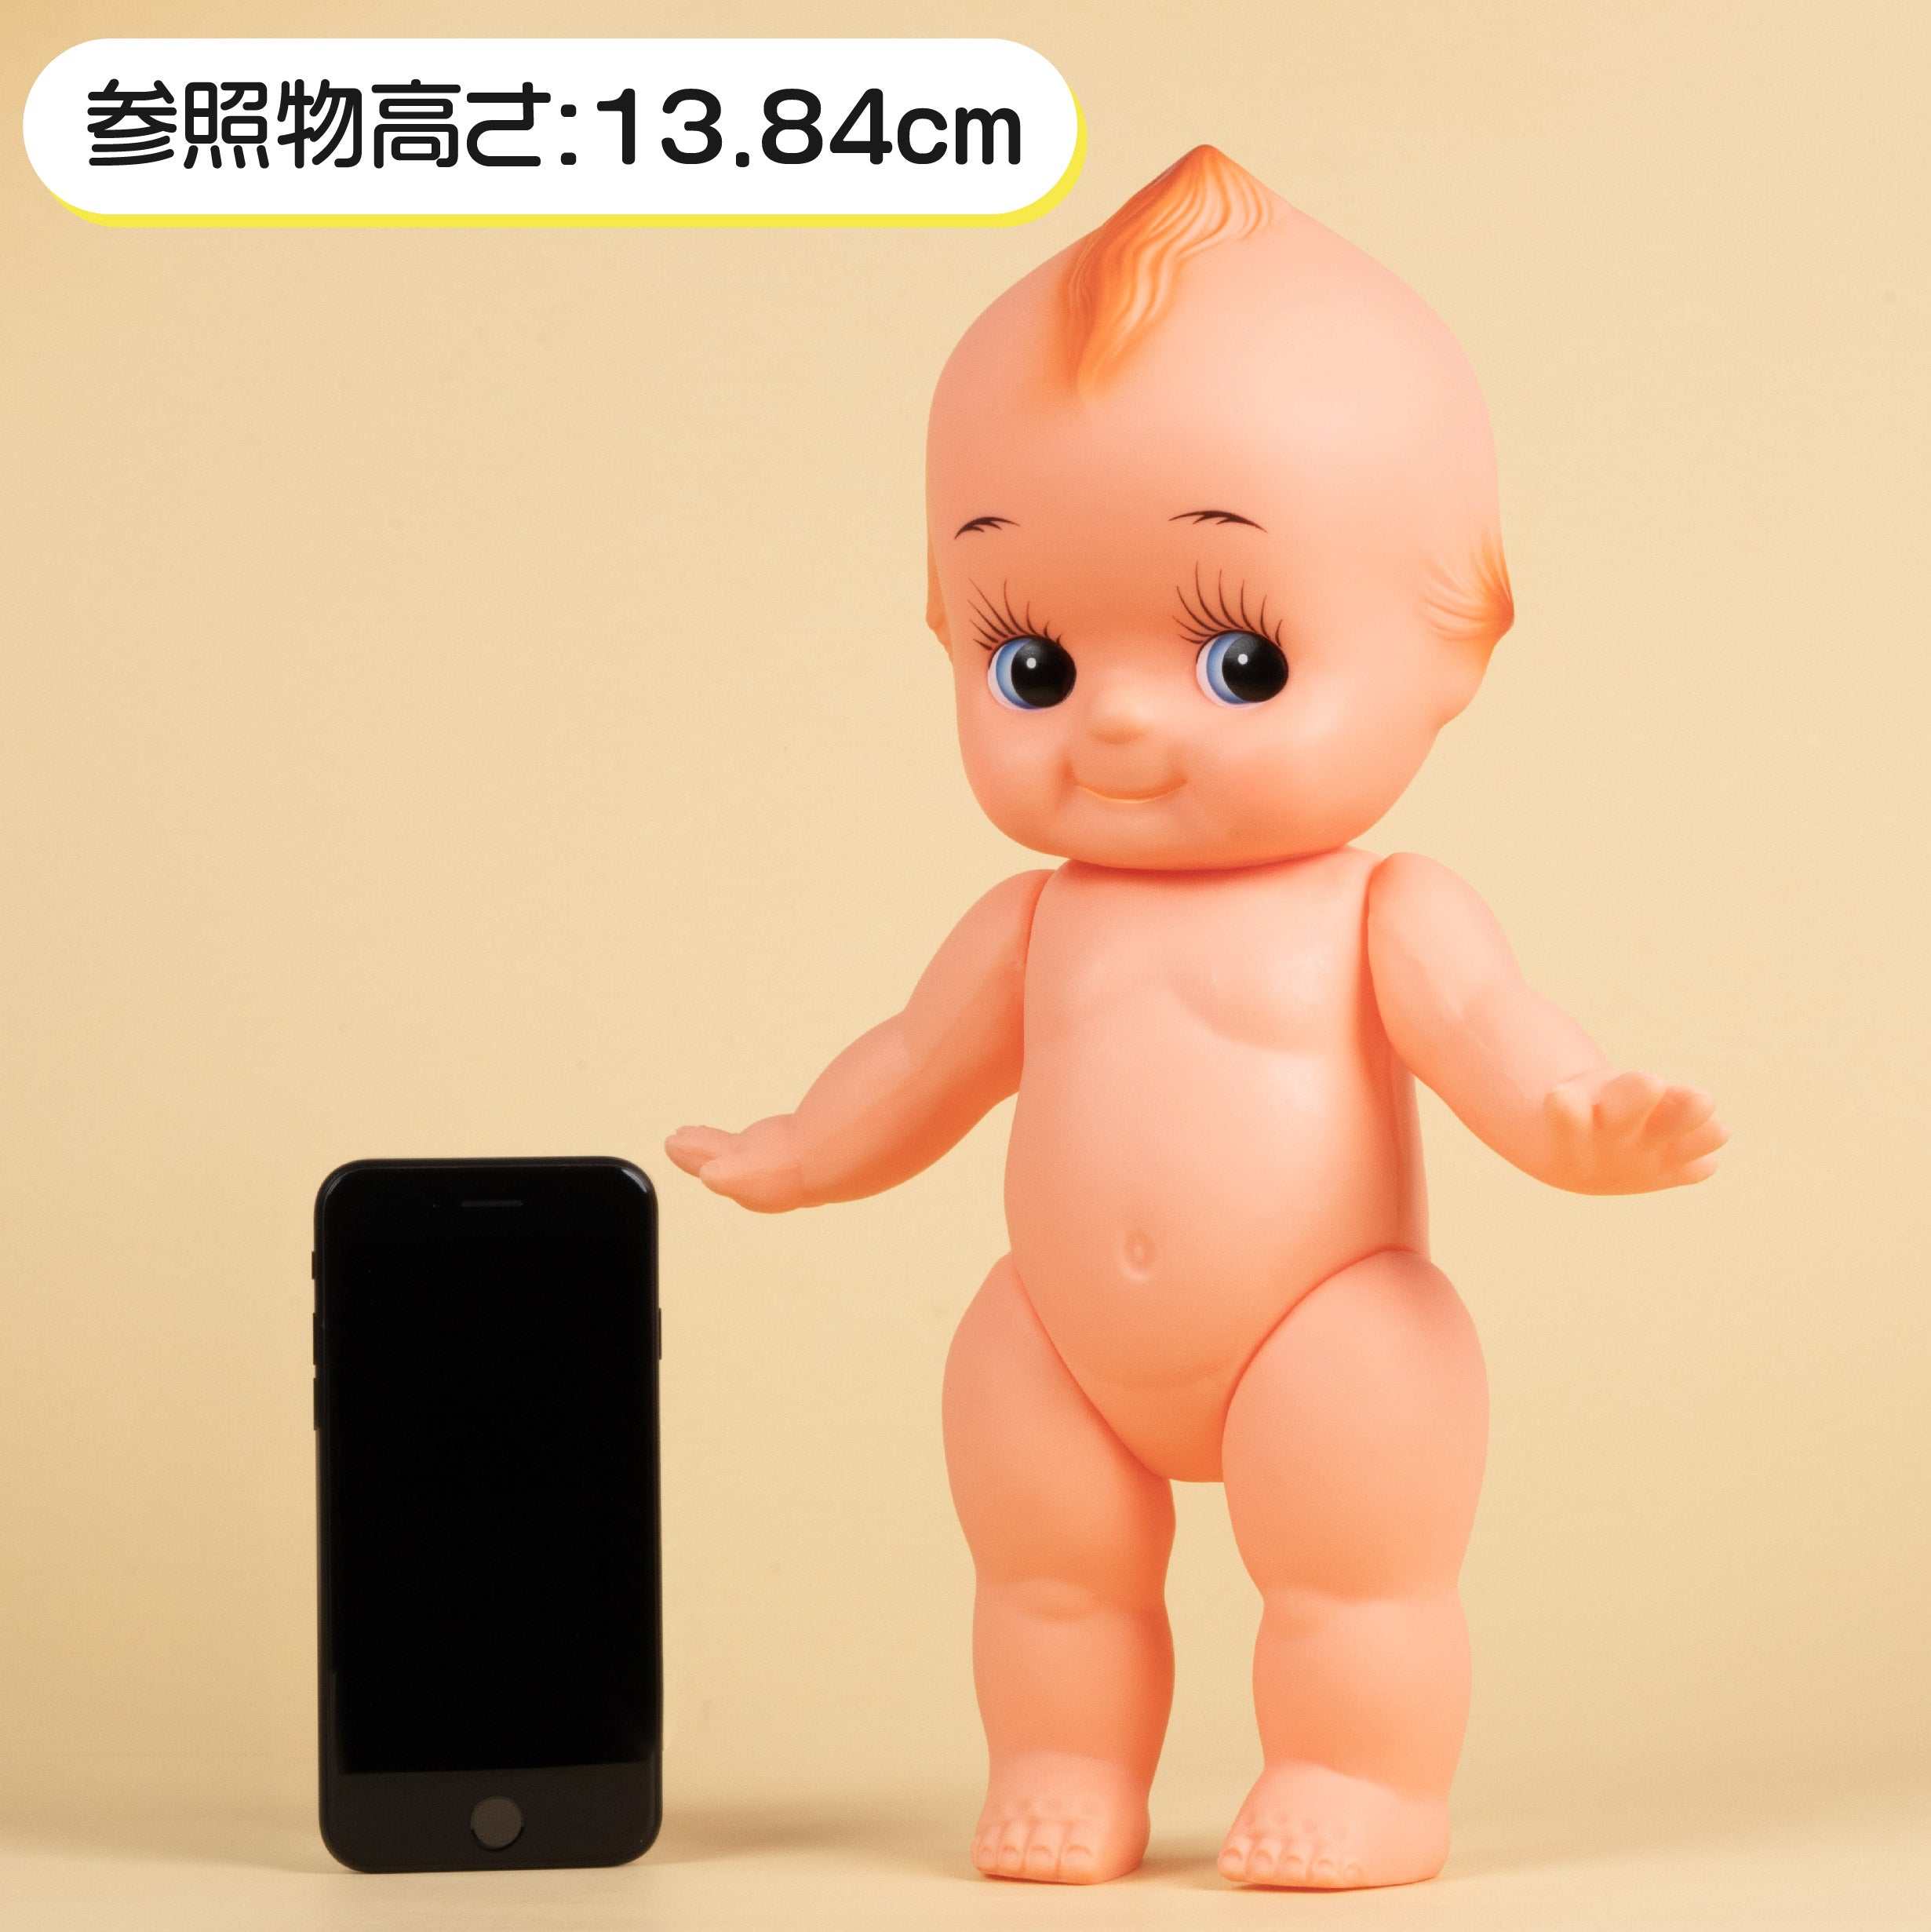 34cm Obitsu Kewpie Doll